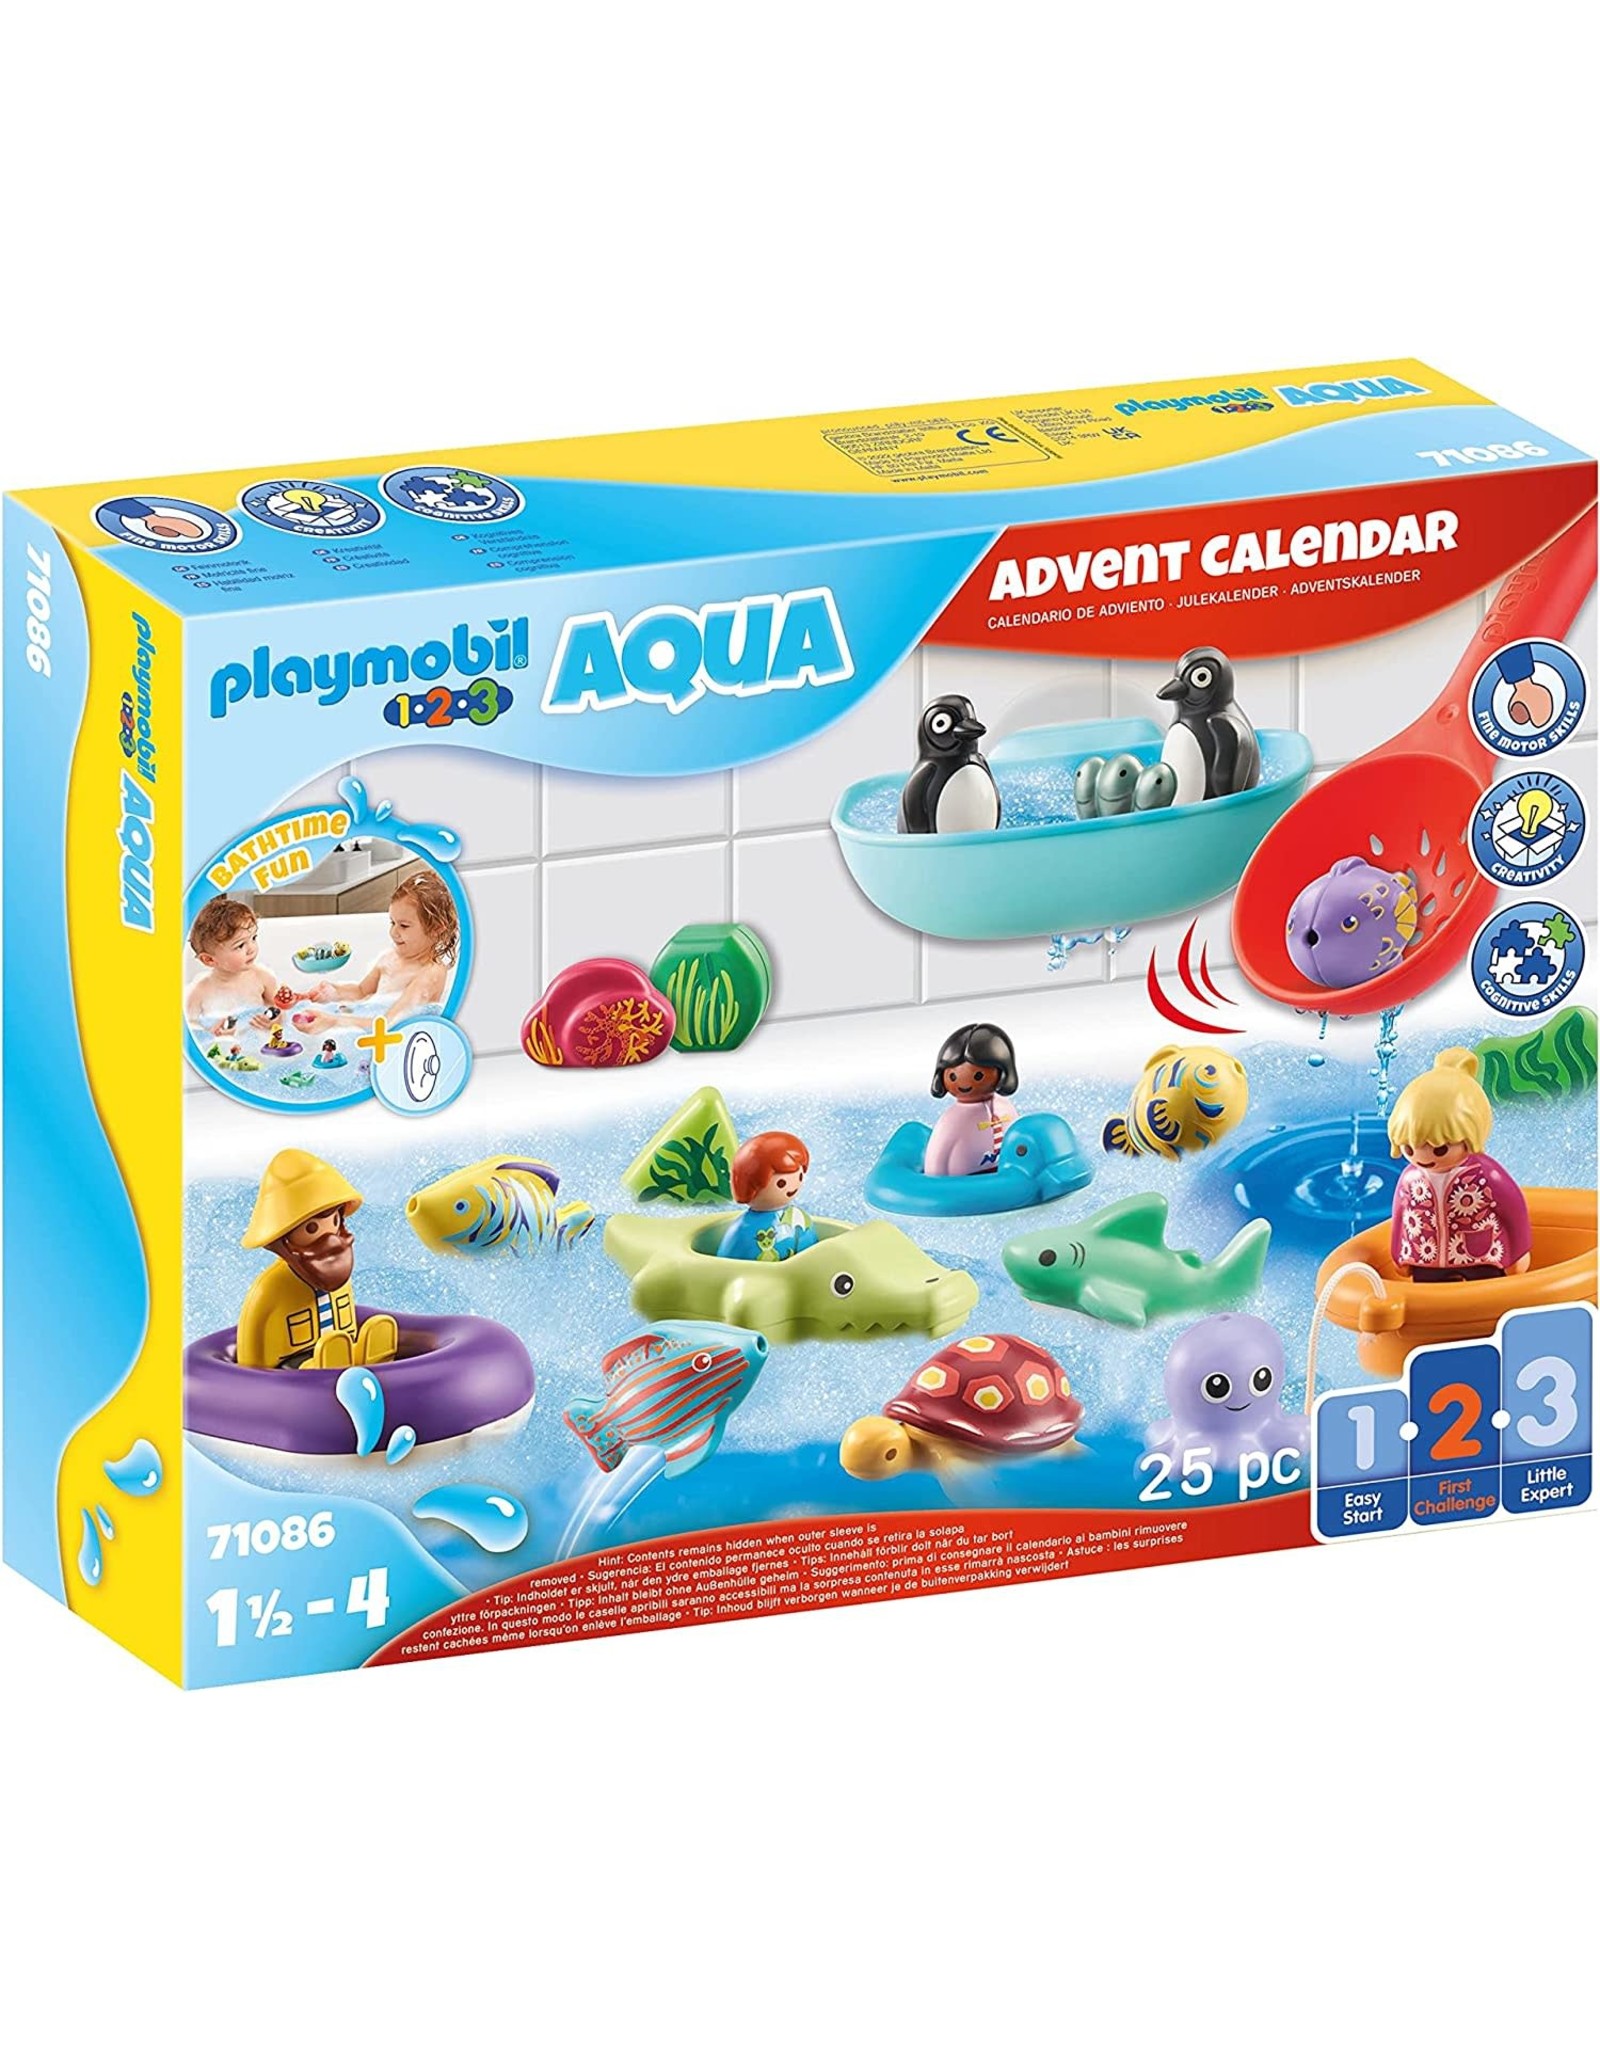 Playmobil Advent Calendar, 1.2.3 Bathtime Fun